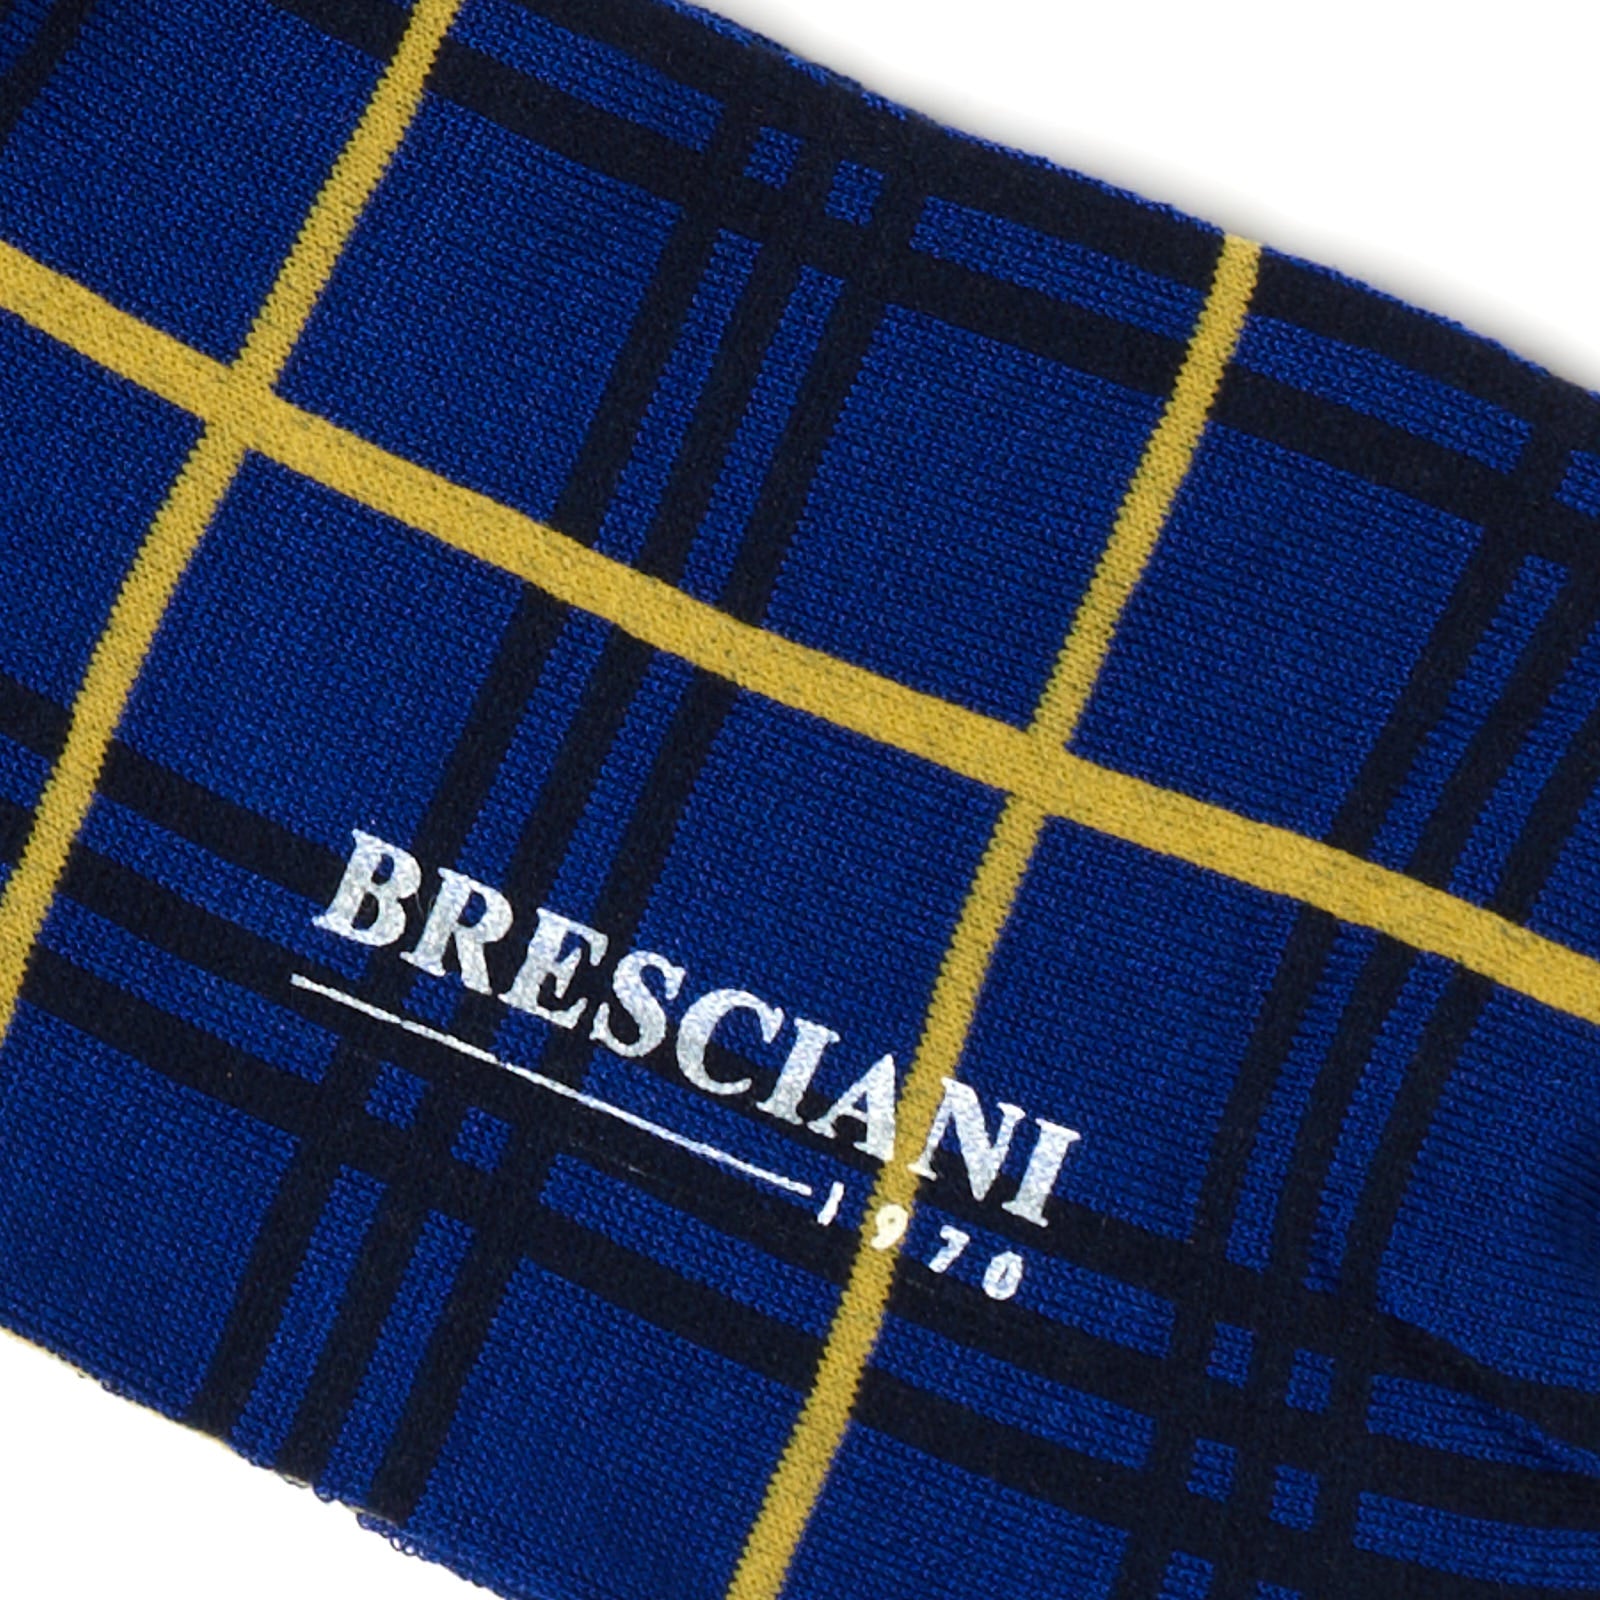 BRESCIANI Cotton Geometry Pattern Design Mid Calf Length Socks US M L BRESCIANI